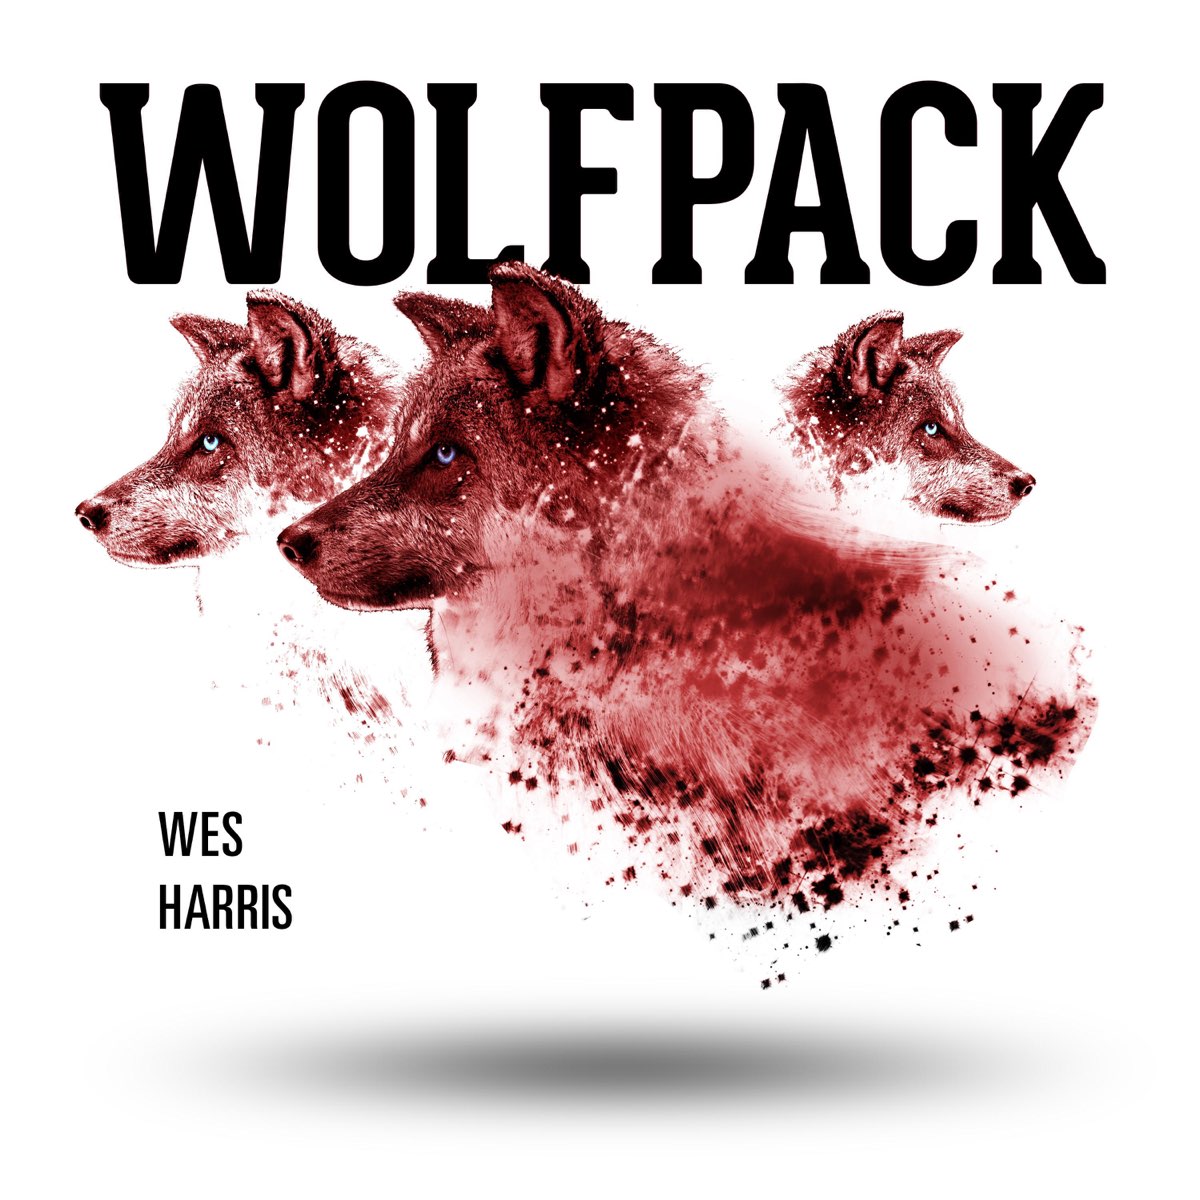 Wes harris feel the beat. Wolfpack слушать.